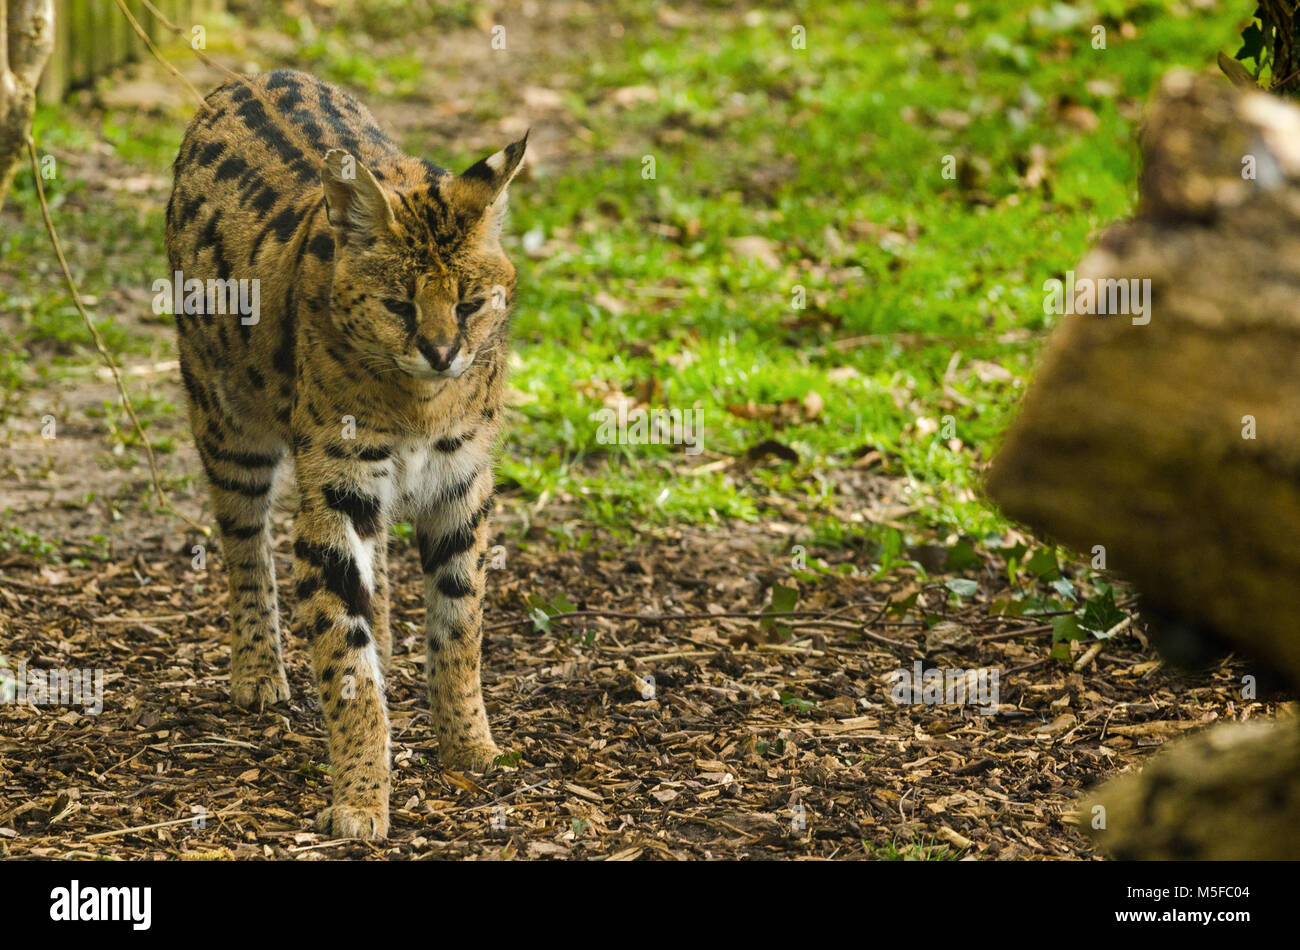 A Serval cat prowls its enclosure Stock Photo